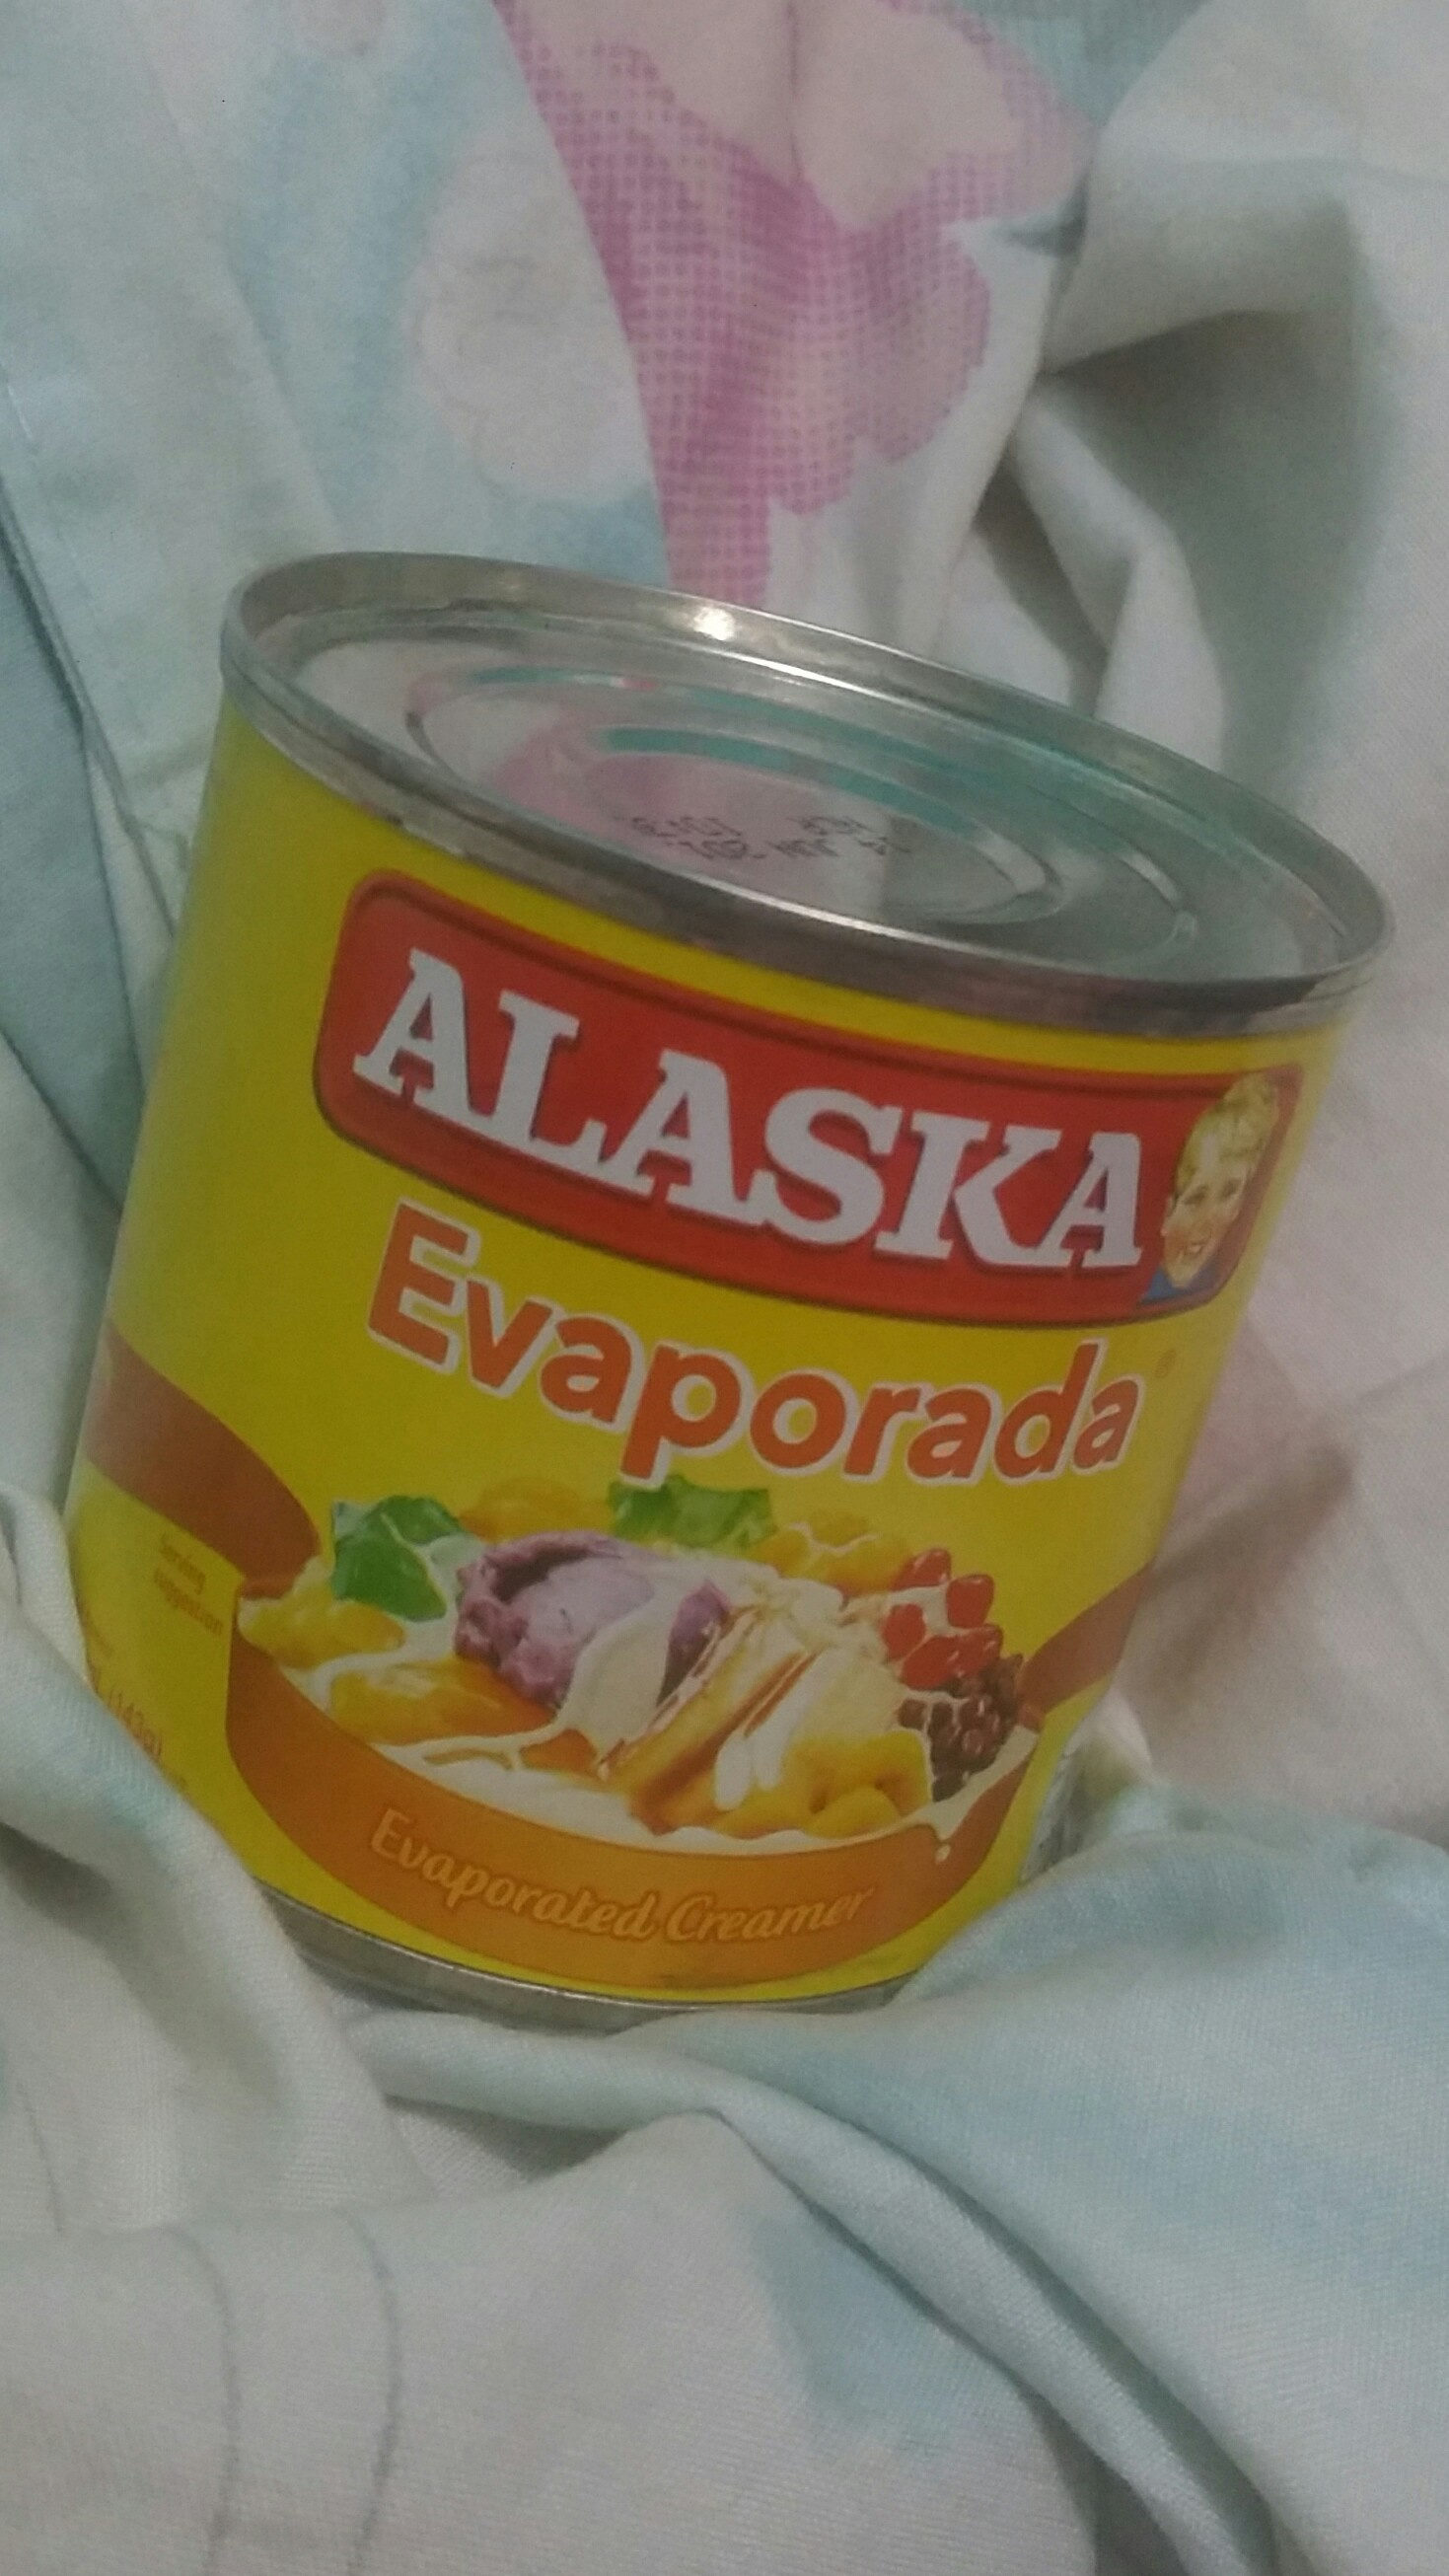 alaska evaporada - Product - en